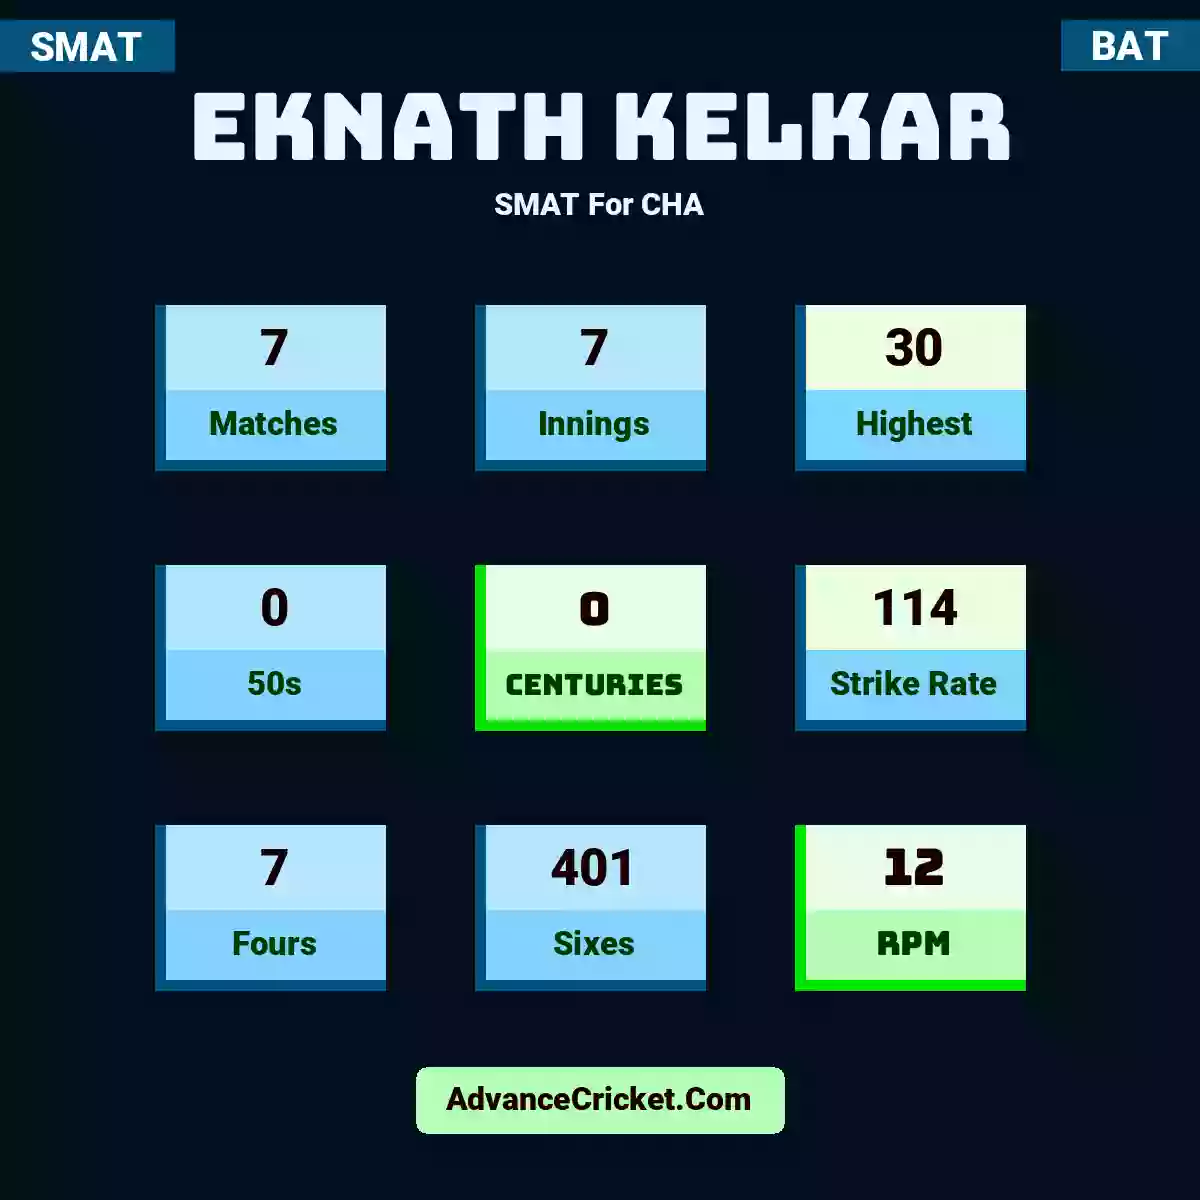 Eknath Kelkar SMAT  For CHA, Eknath Kelkar played 7 matches, scored 30 runs as highest, 0 half-centuries, and 0 centuries, with a strike rate of 114. E.Kelkar hit 7 fours and 401 sixes, with an RPM of 12.